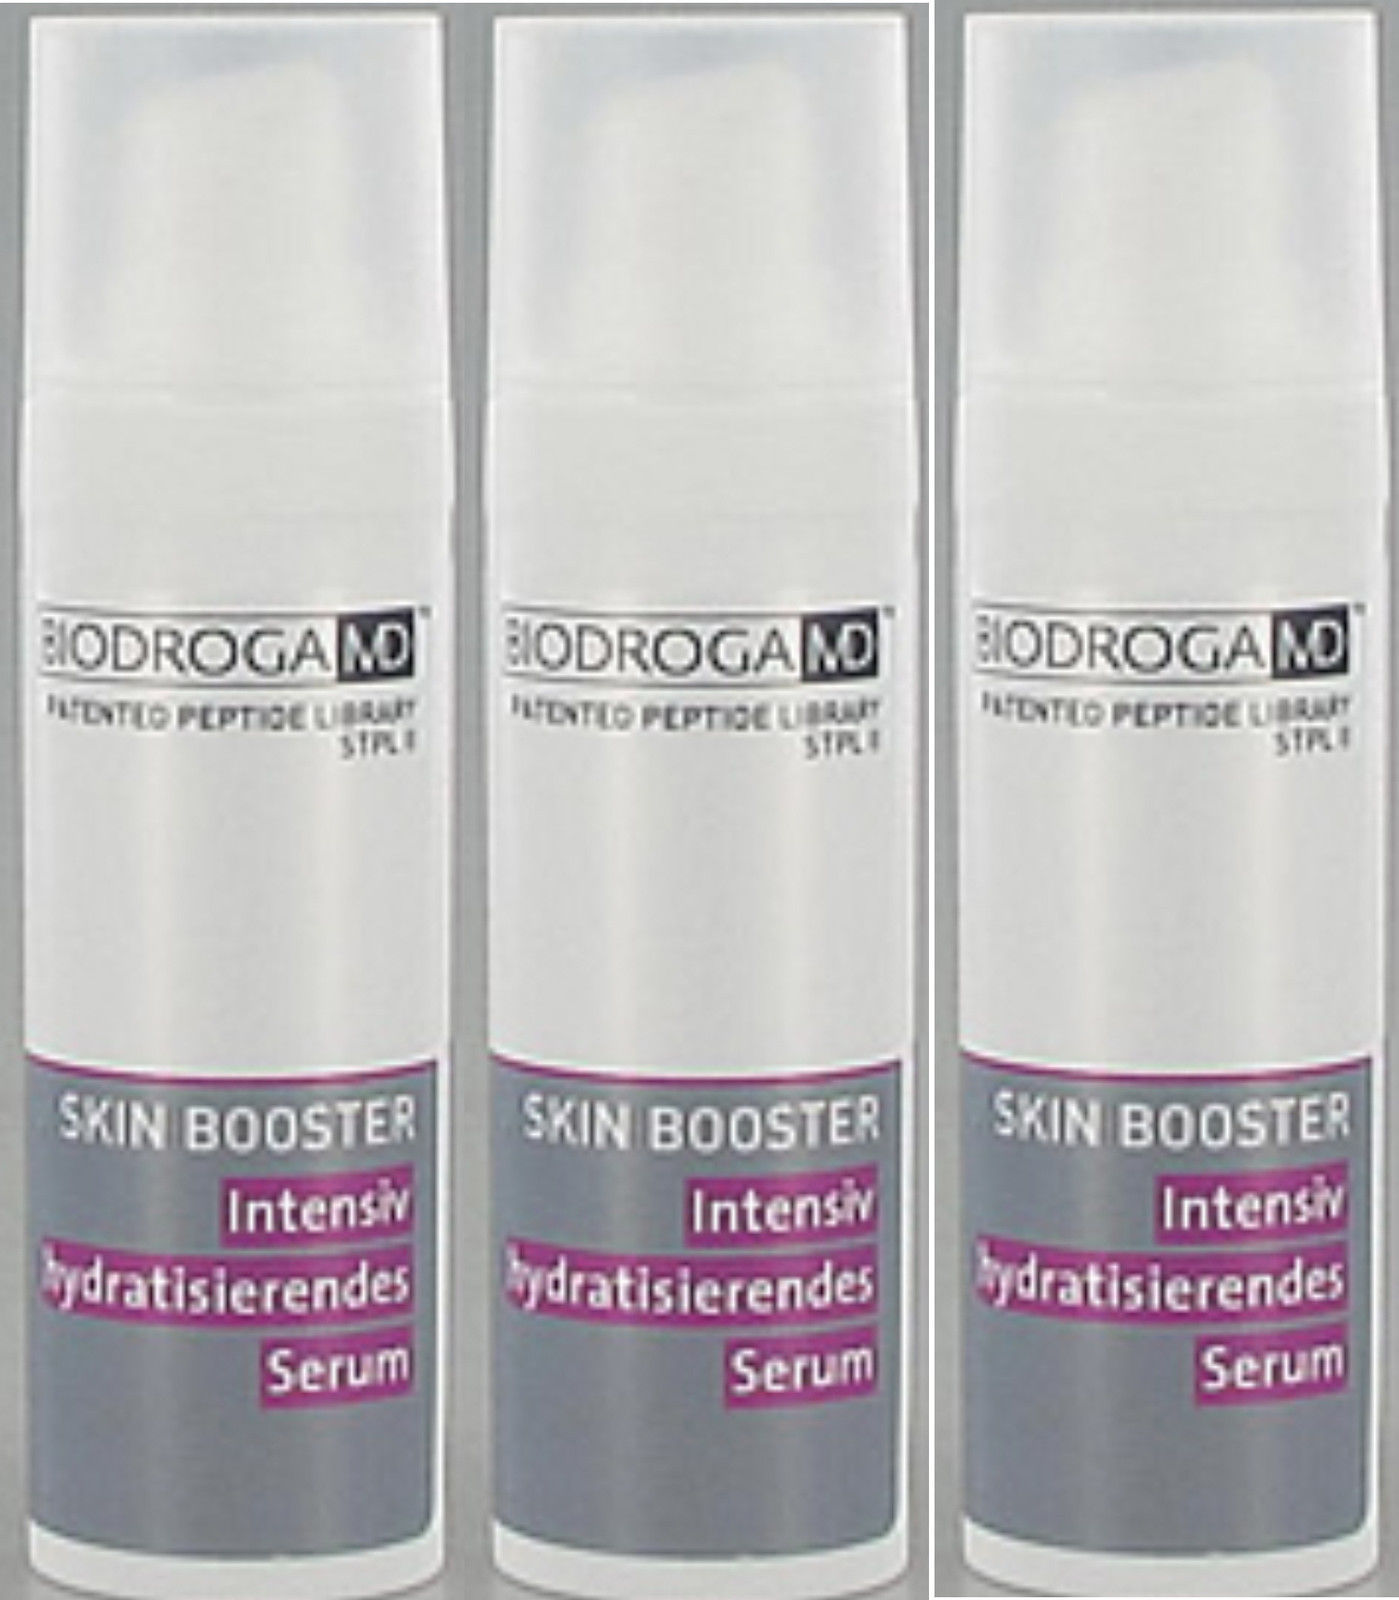 BIODROGA MD Intense Moisture serum 30 ml. 10 times more moisture than hyaluron - $84.25